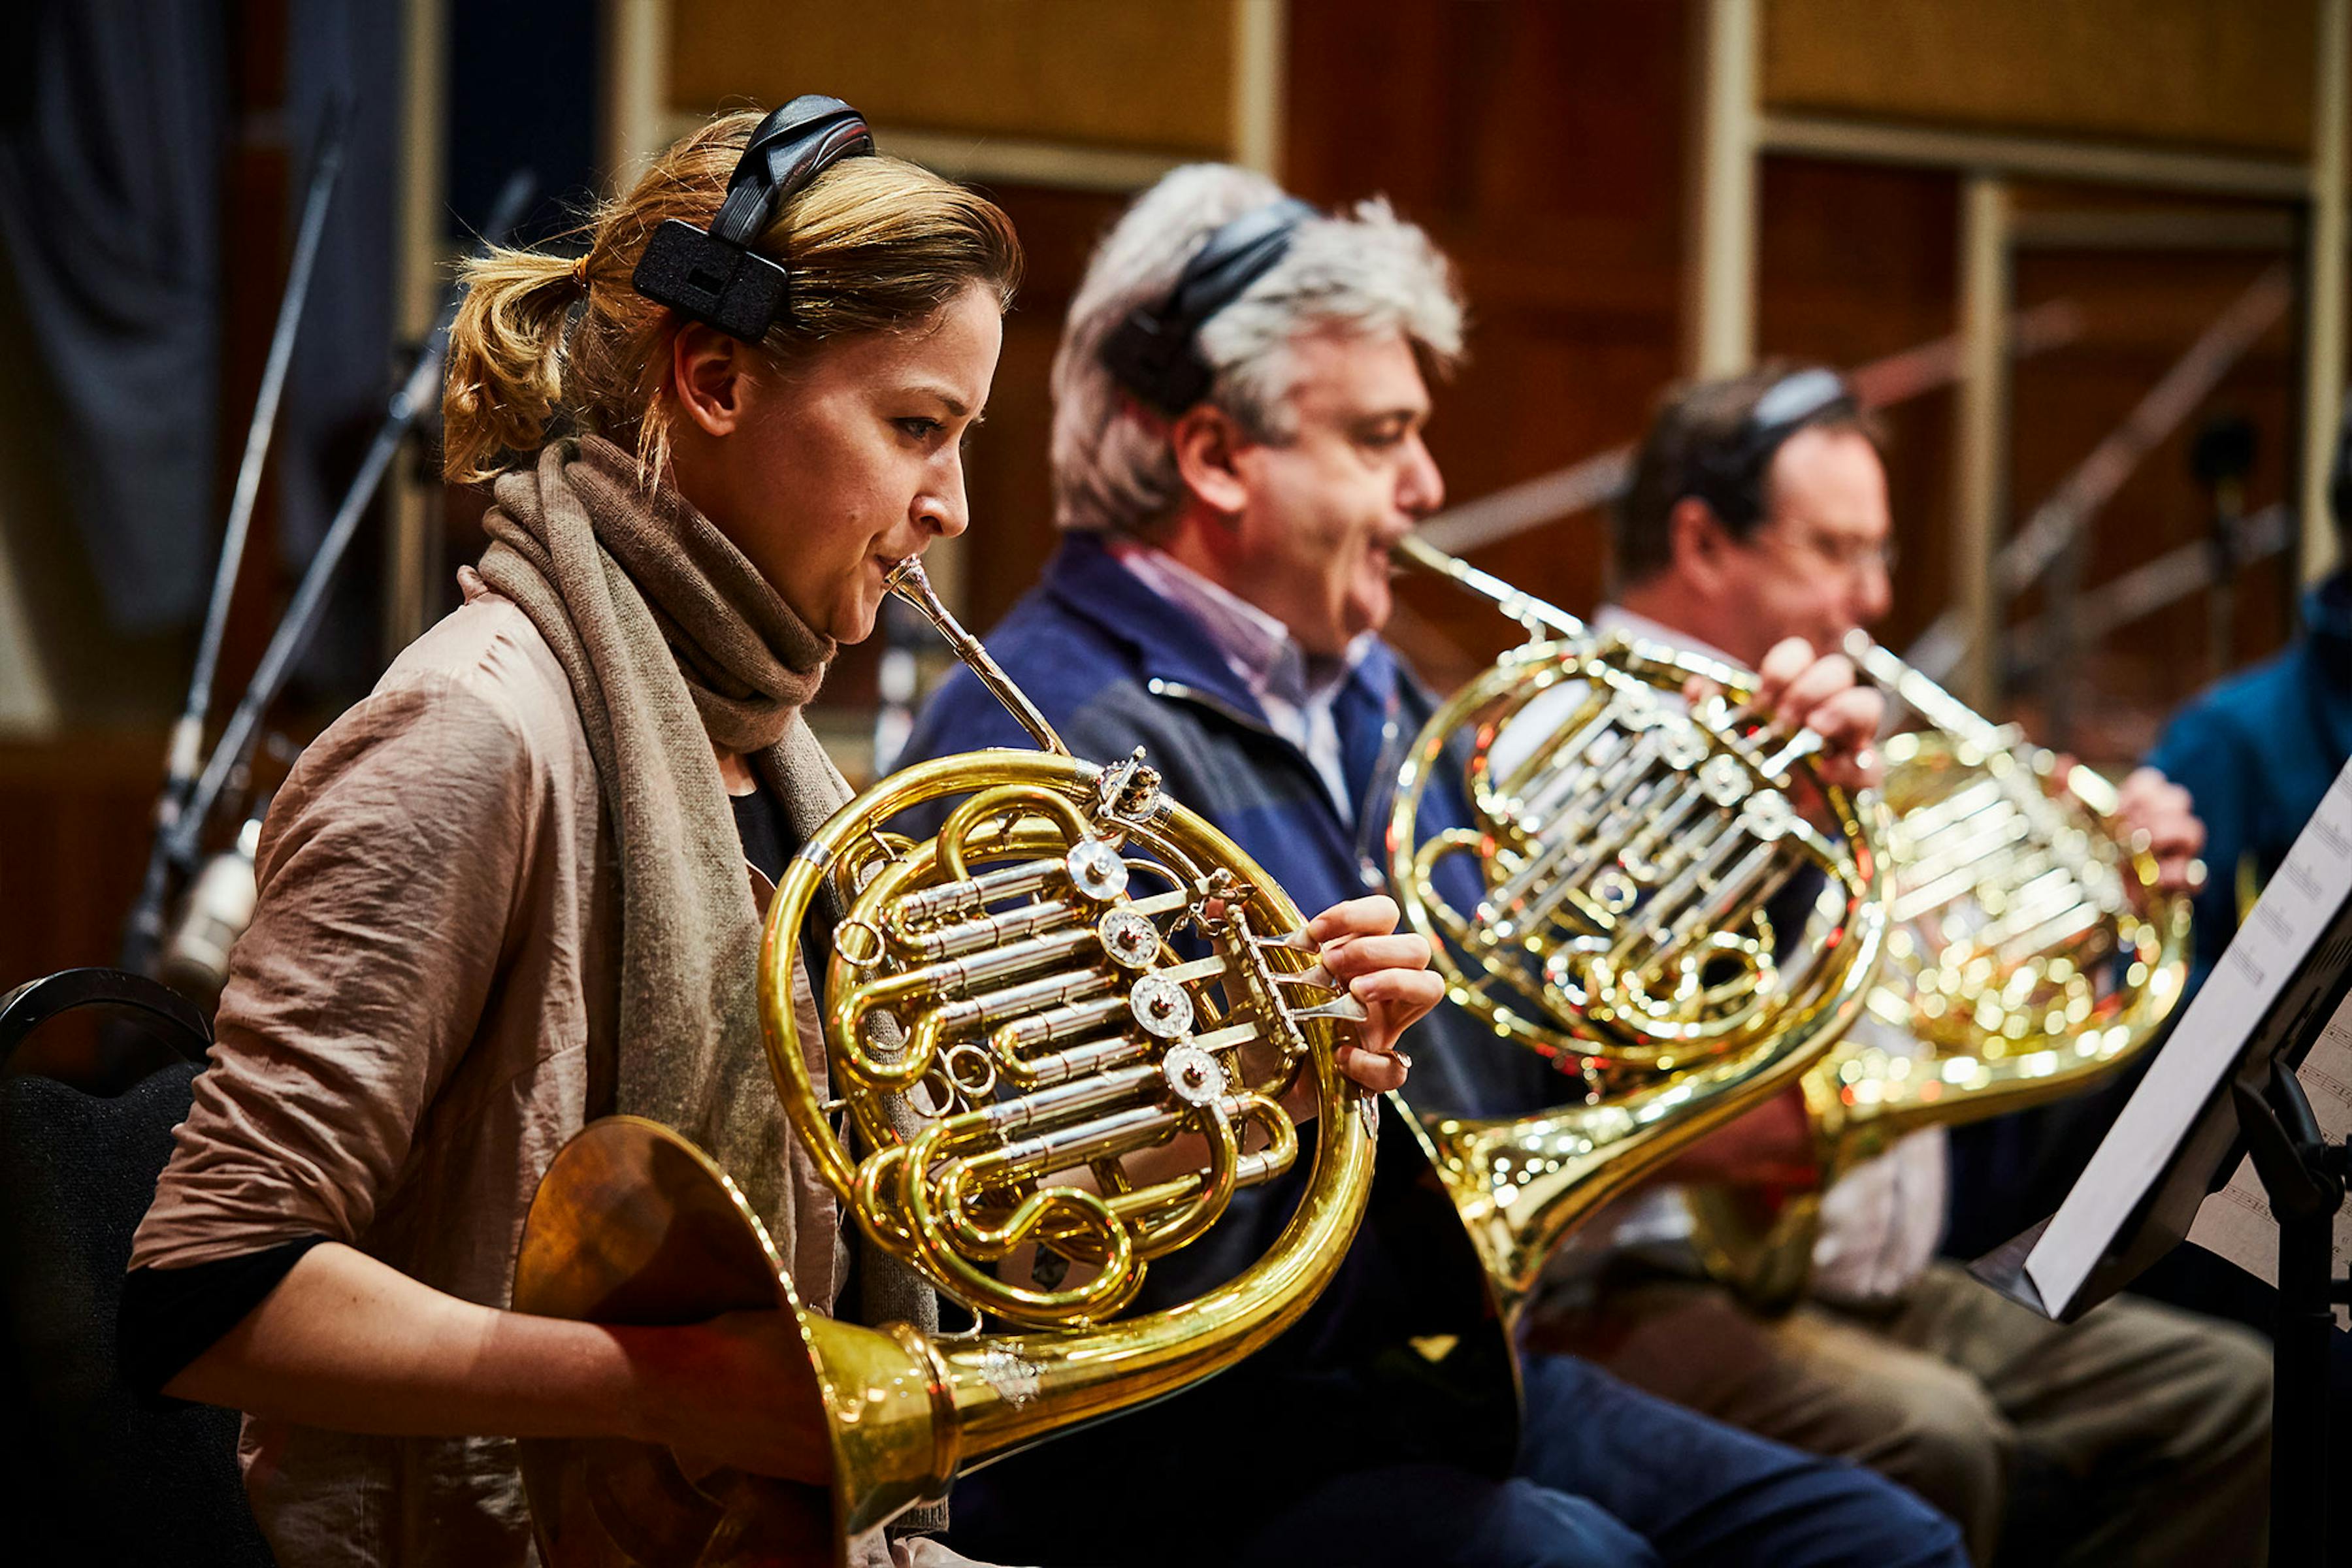 Symphonic Brass french horns